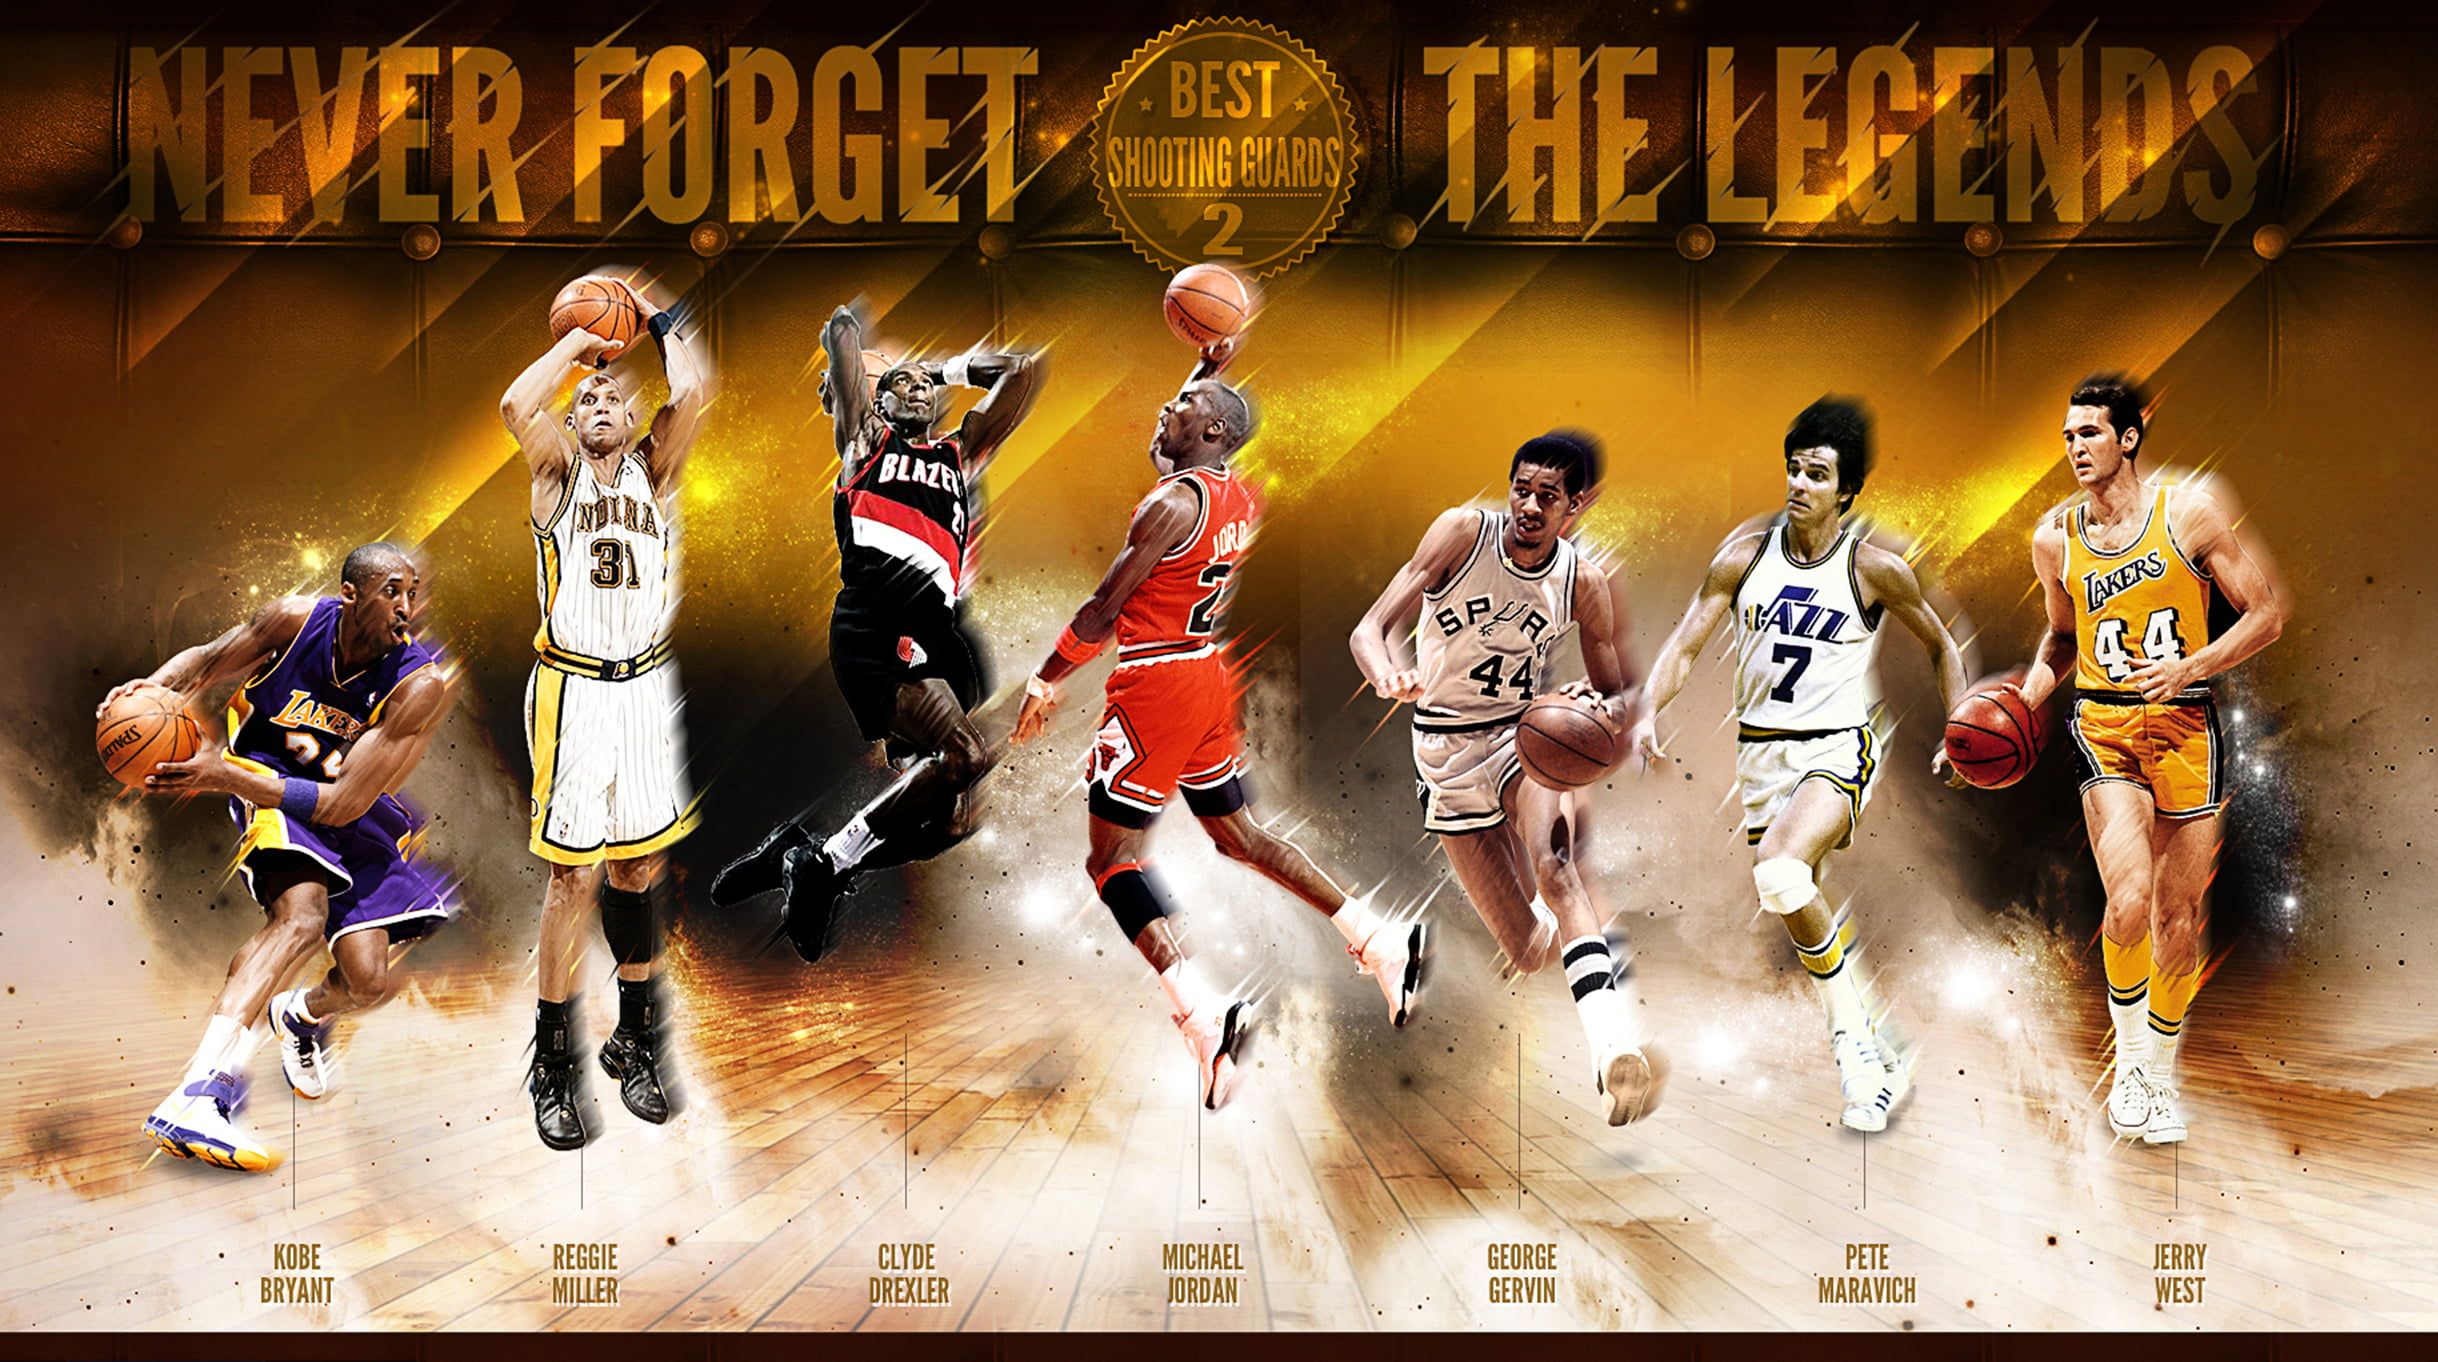 basketball players wallpaper #Sport #Basketball Michael Jordan #NBA Kobe Bryant #Legends George Gervin Jerry West Cly. Basketball, Nba legends, Basketball players